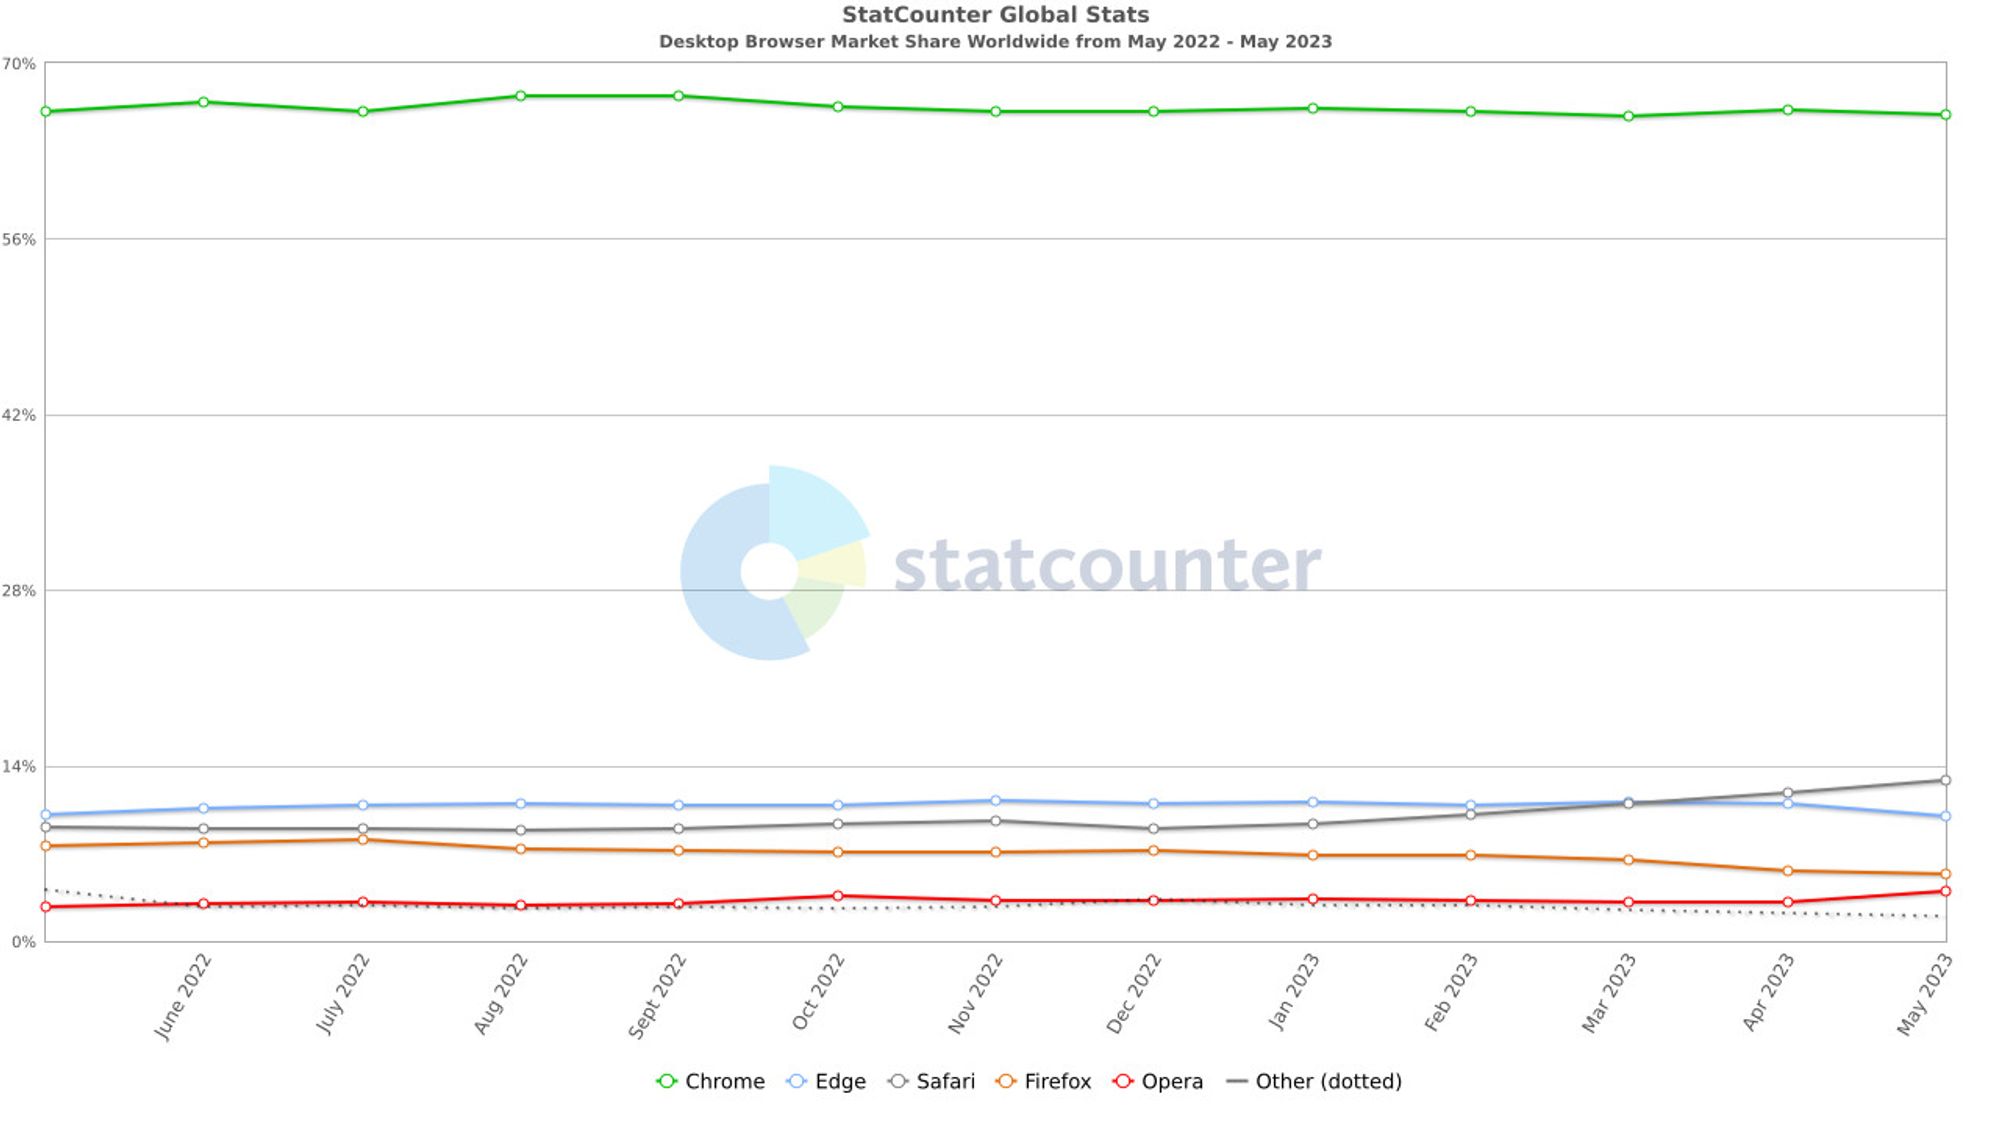 Edge 浏览器市场占有率不足 10%，Safari 巩固位置